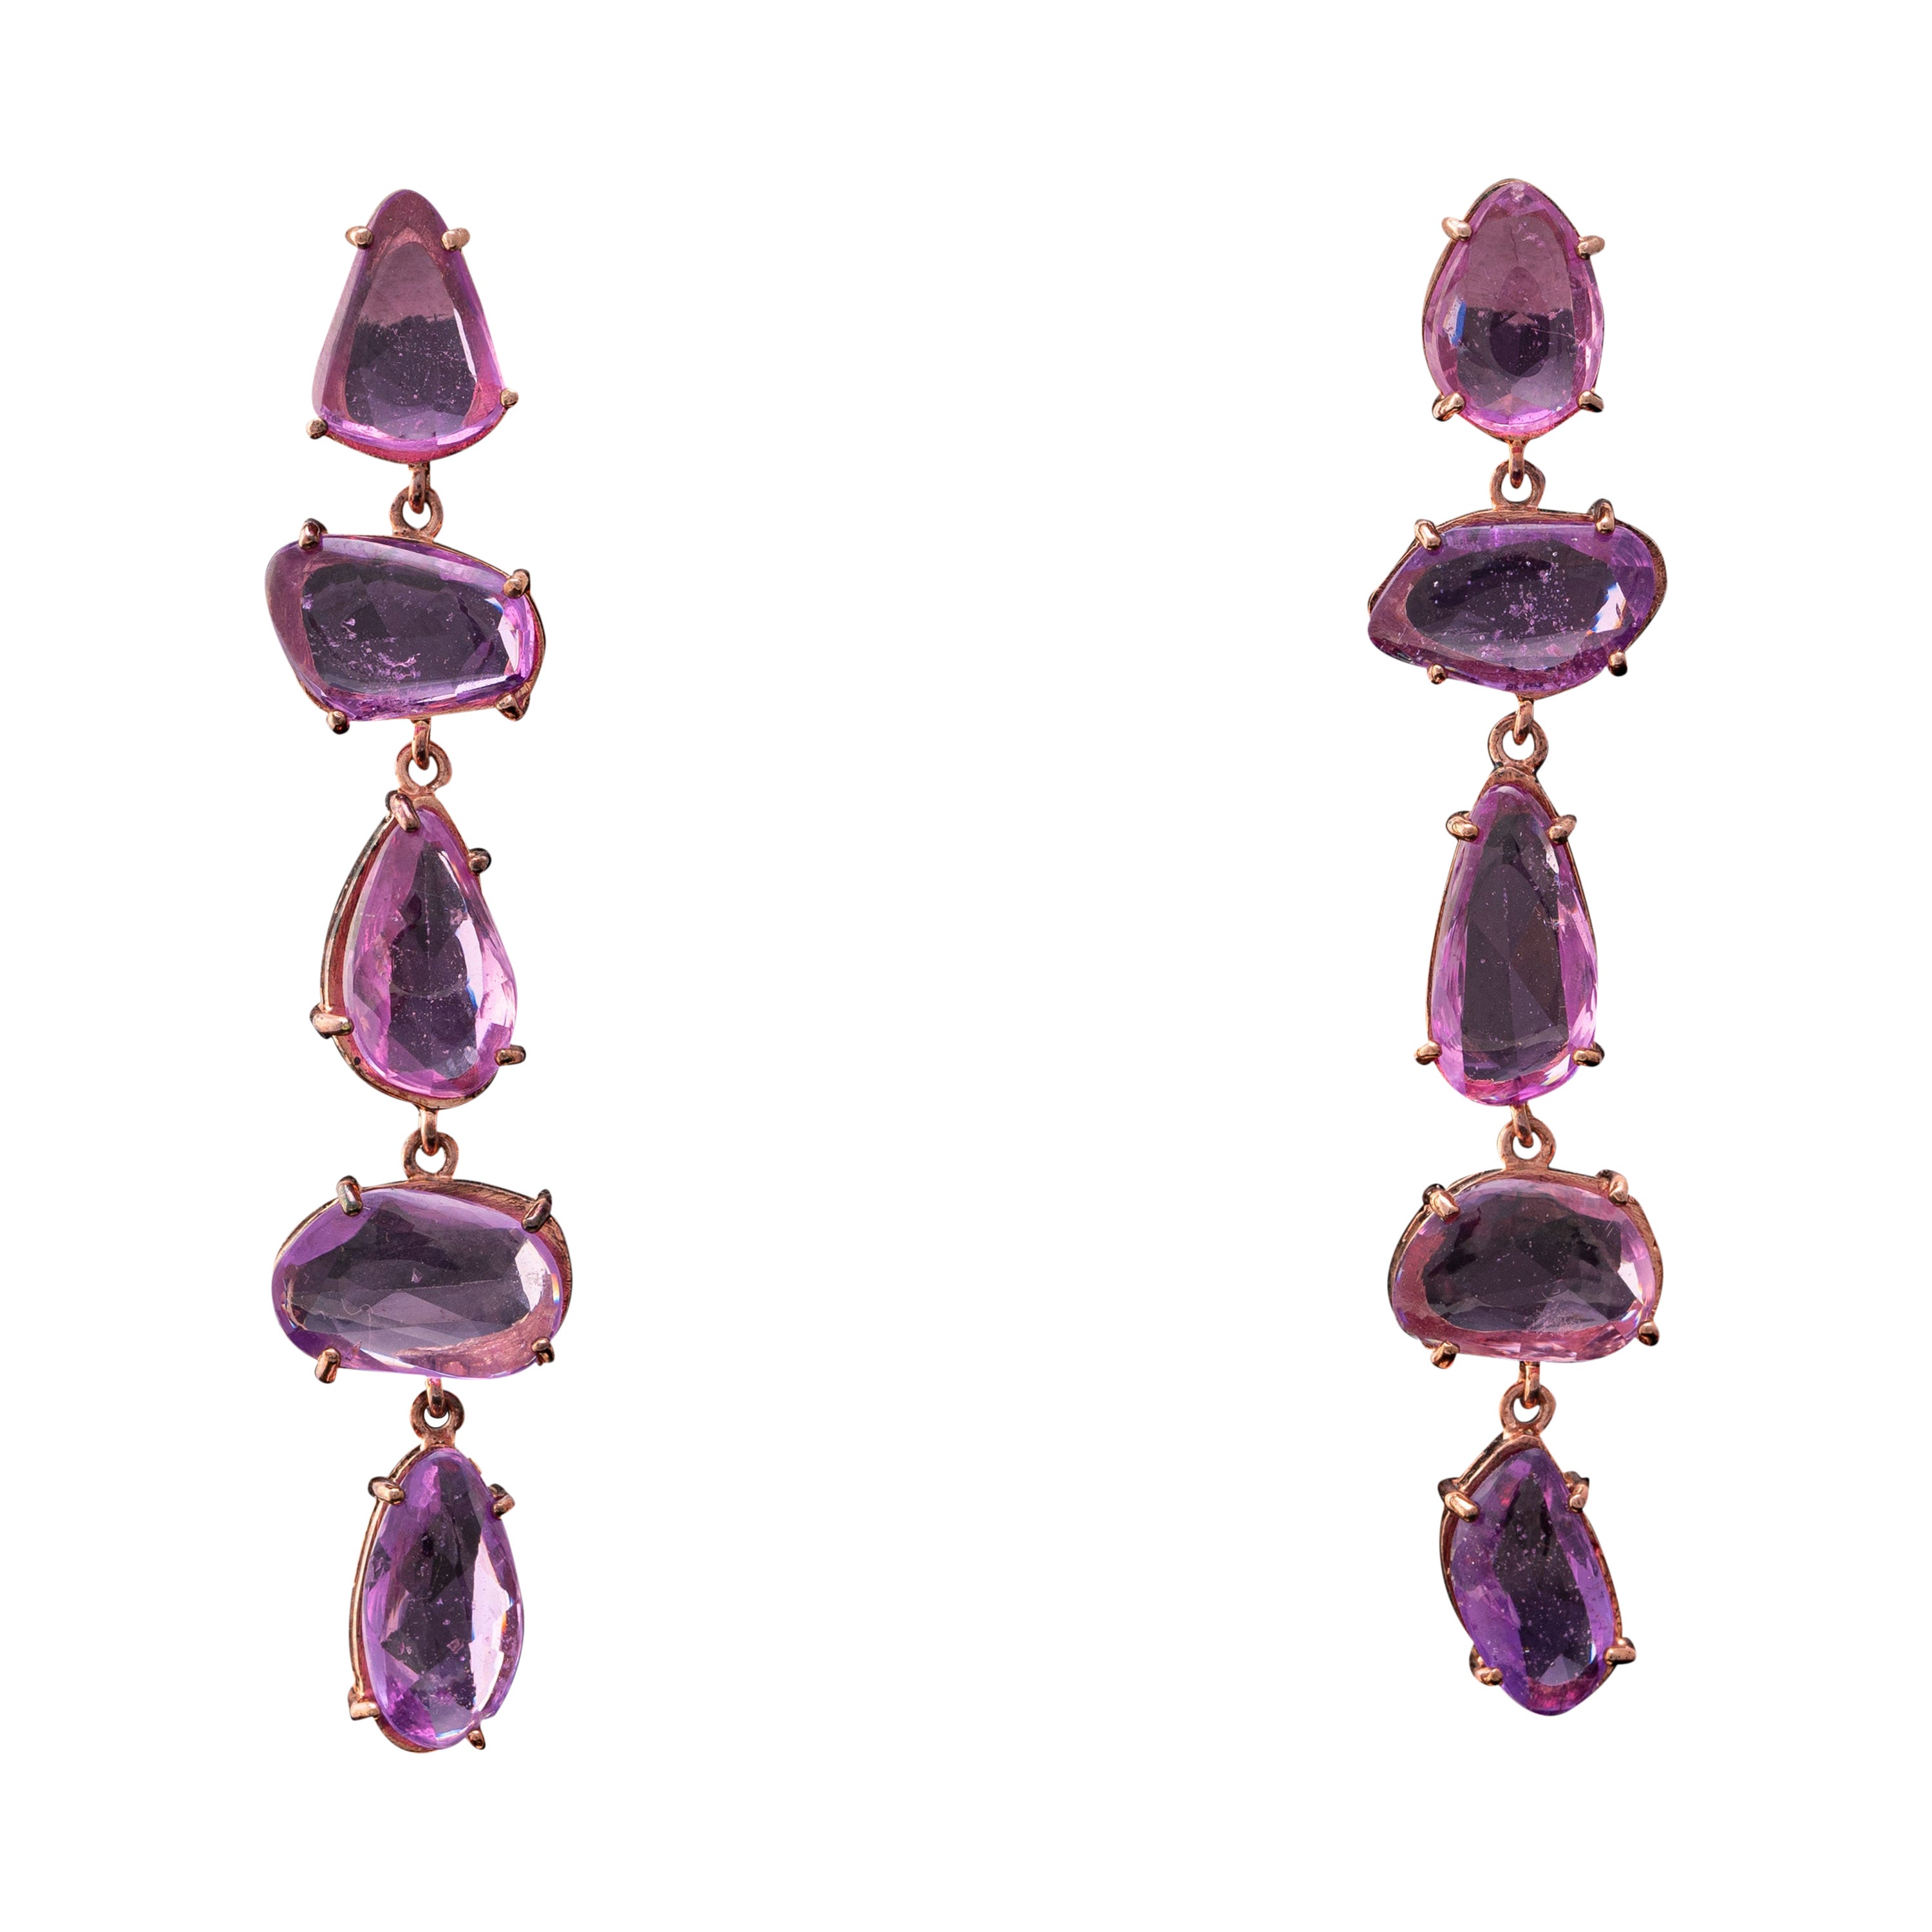 Certified 12 Carat Pink Sapphire Rose Cut Drop Earrings Set in Pink Gold